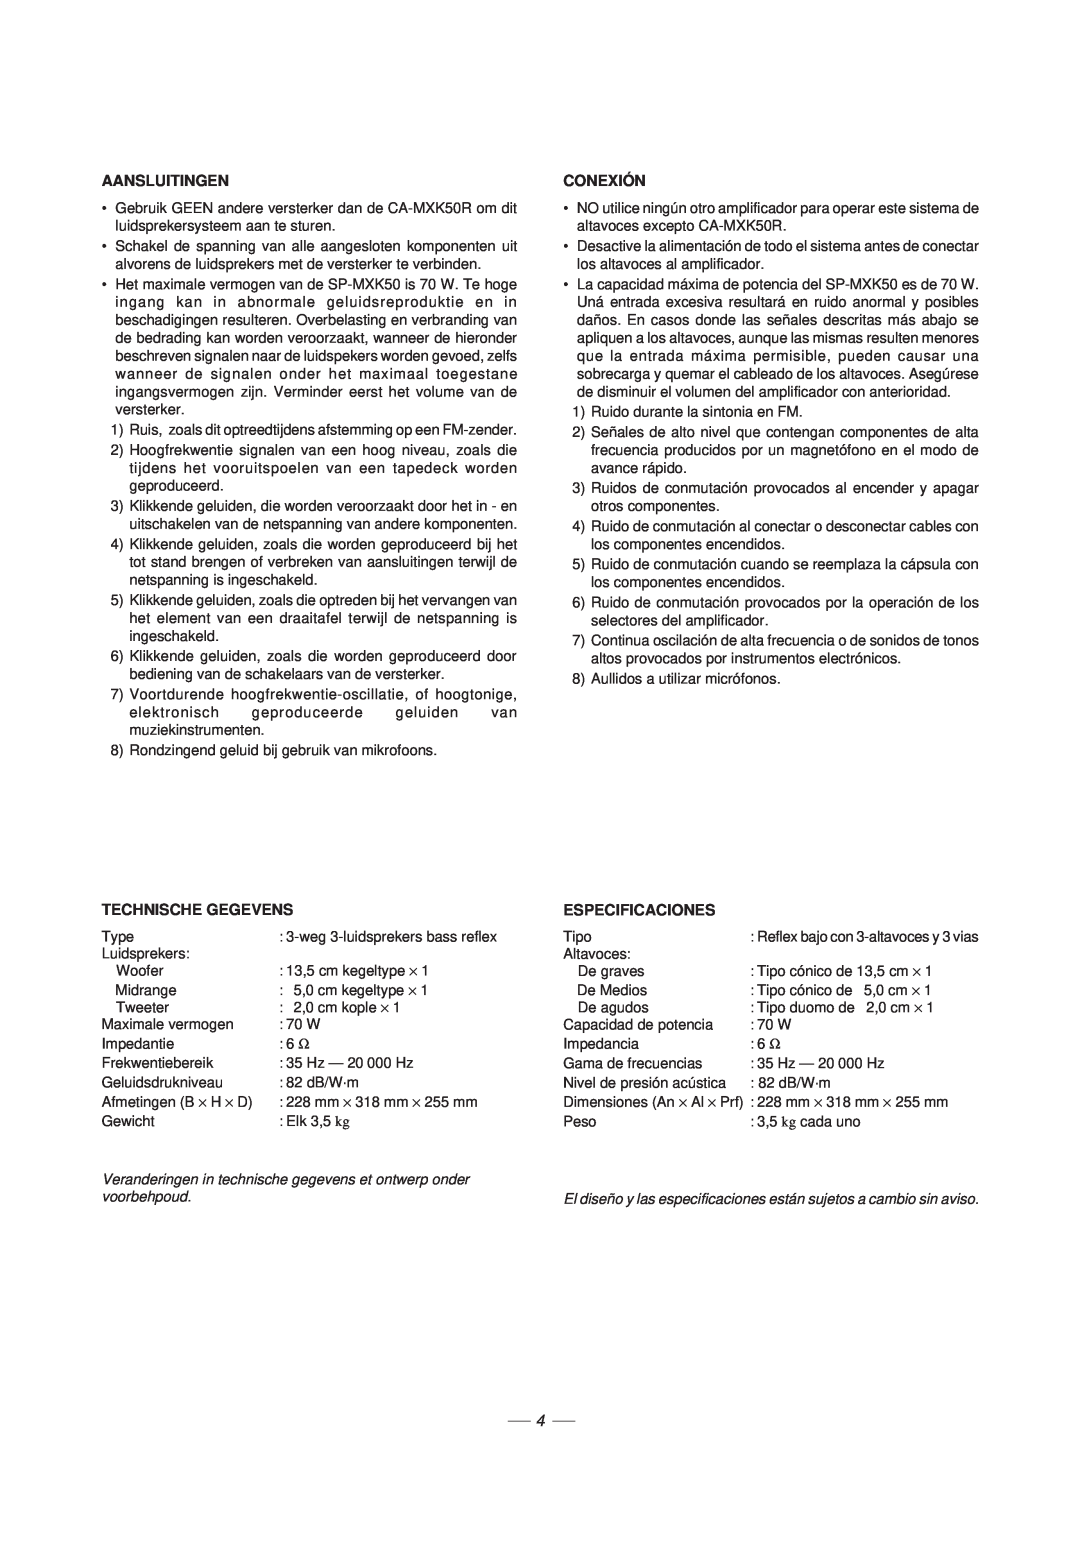 JVC CA-MXK50R manual Aansluitingen, Technische Gegevens, Conexión, Especificaciones 